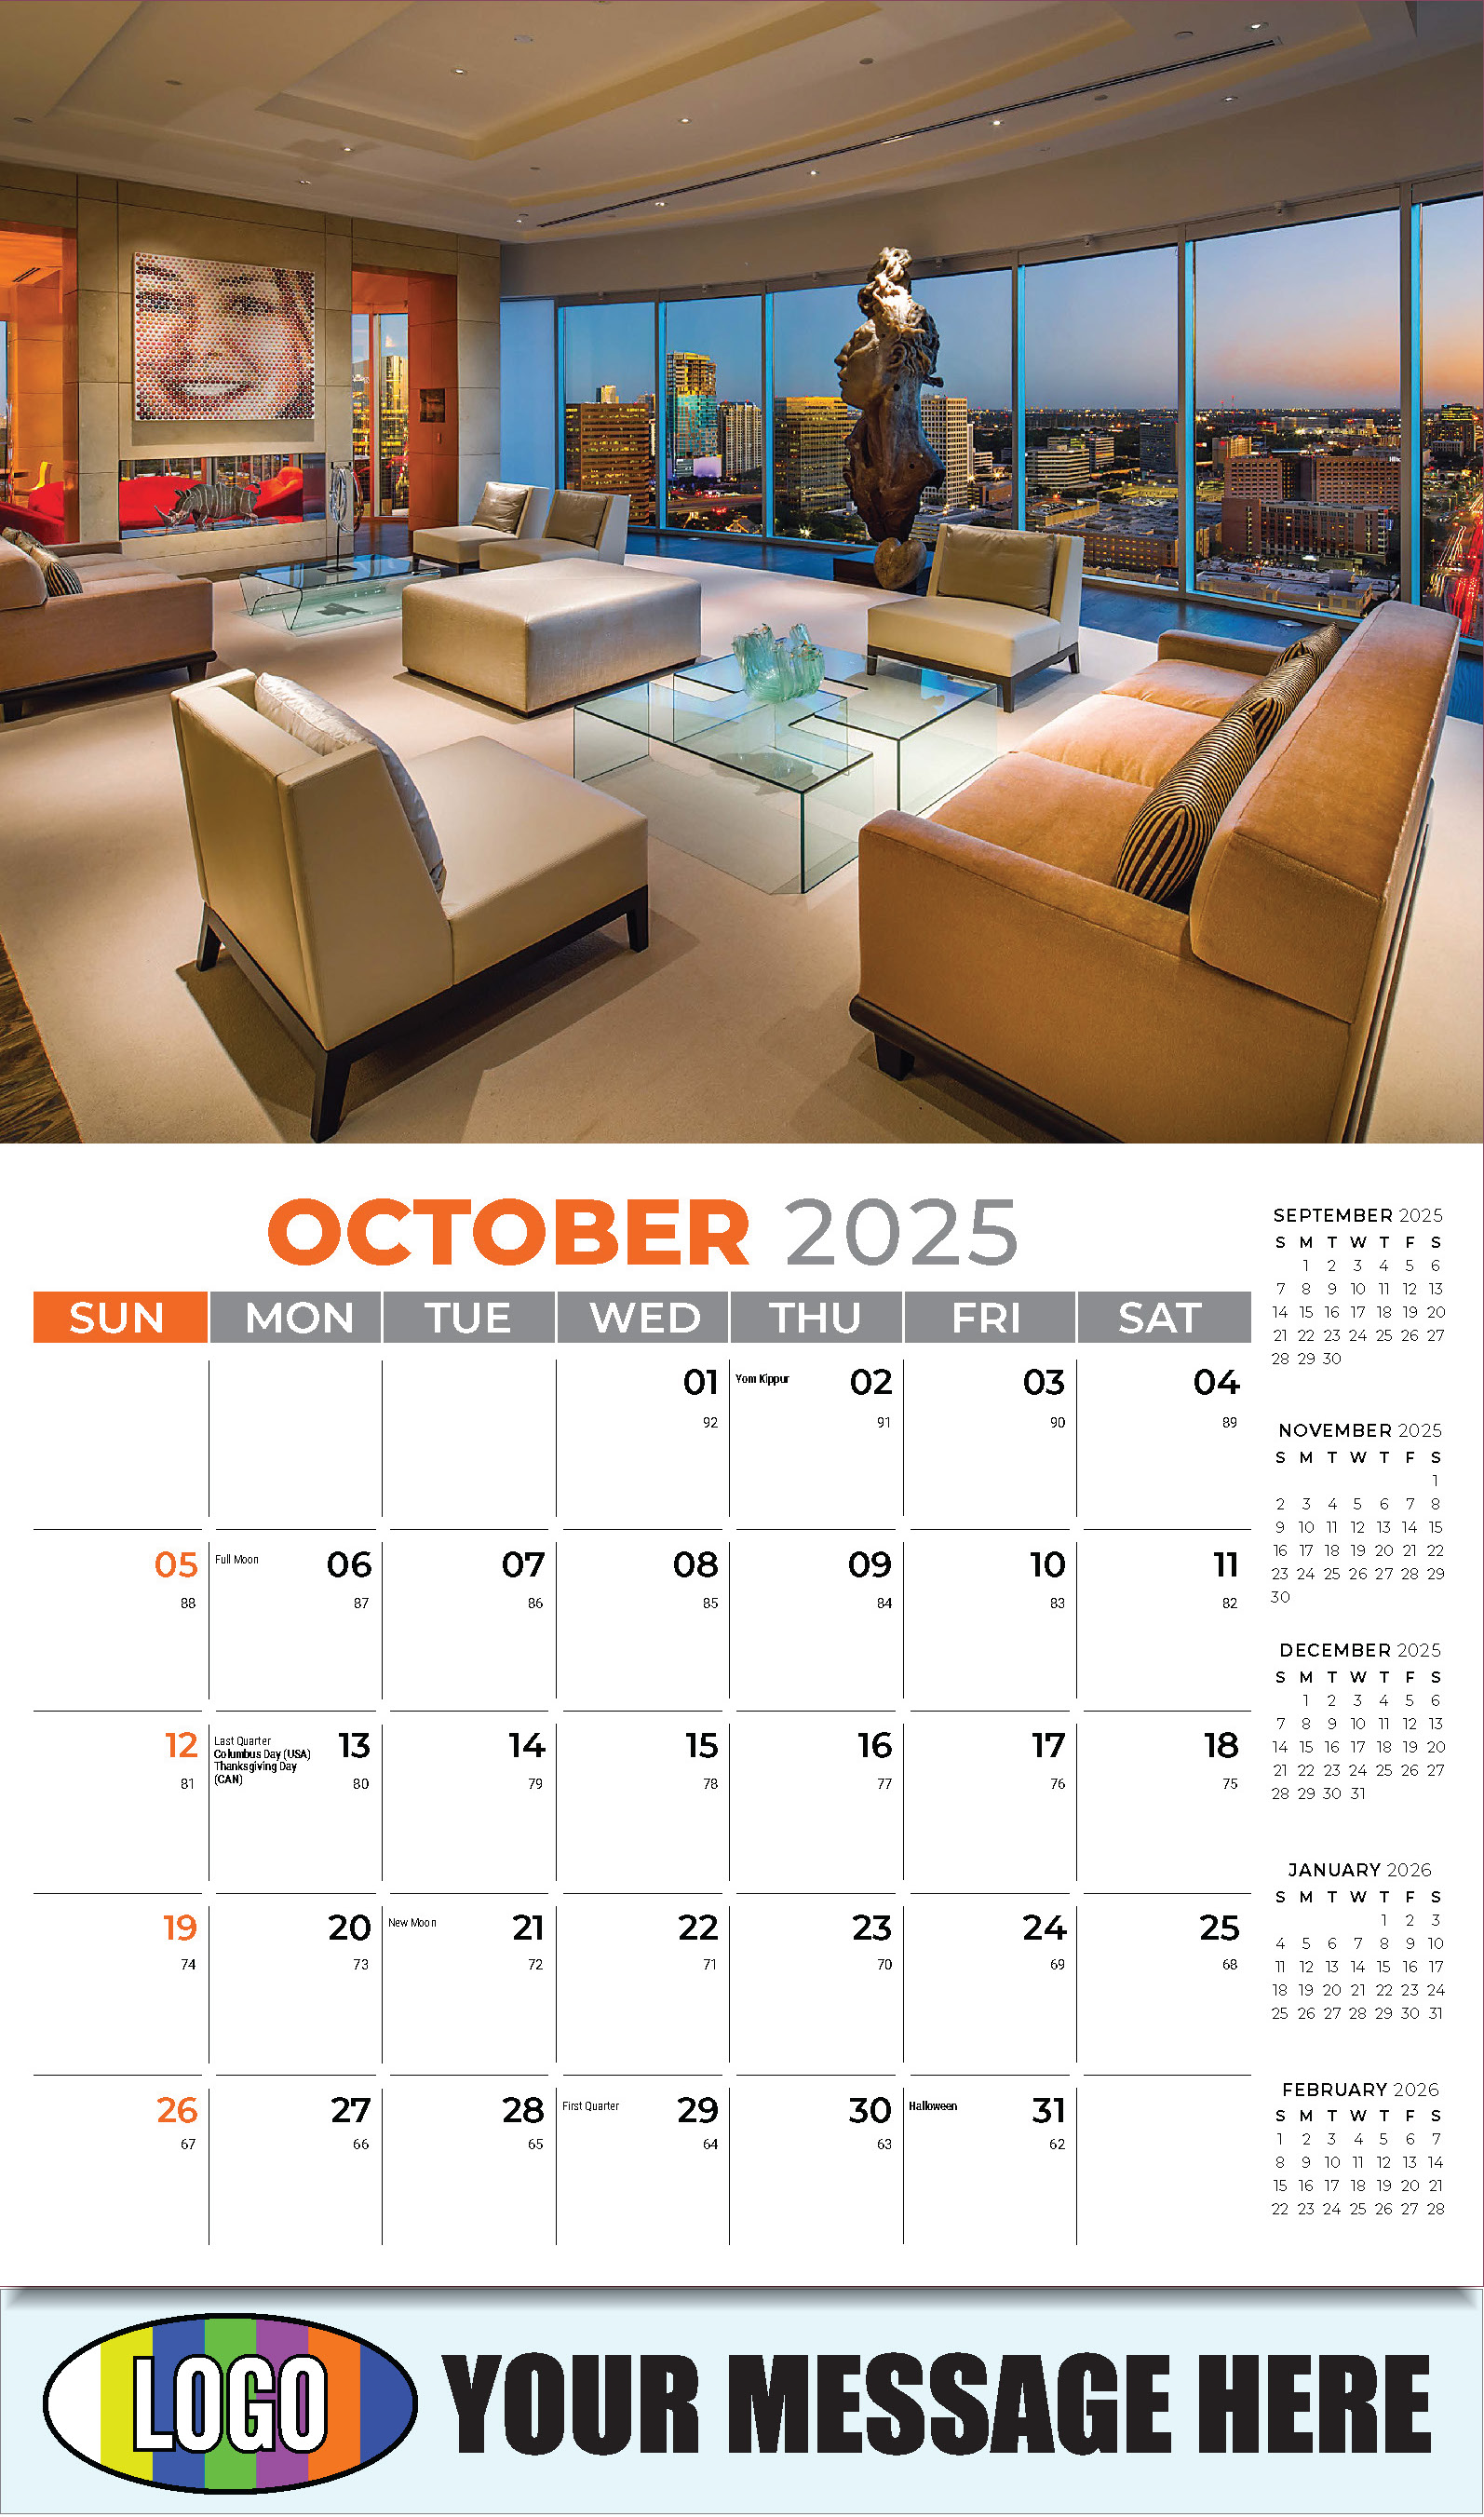 Decor and Design 2025 Interior Design Business Promotional Calendar - October